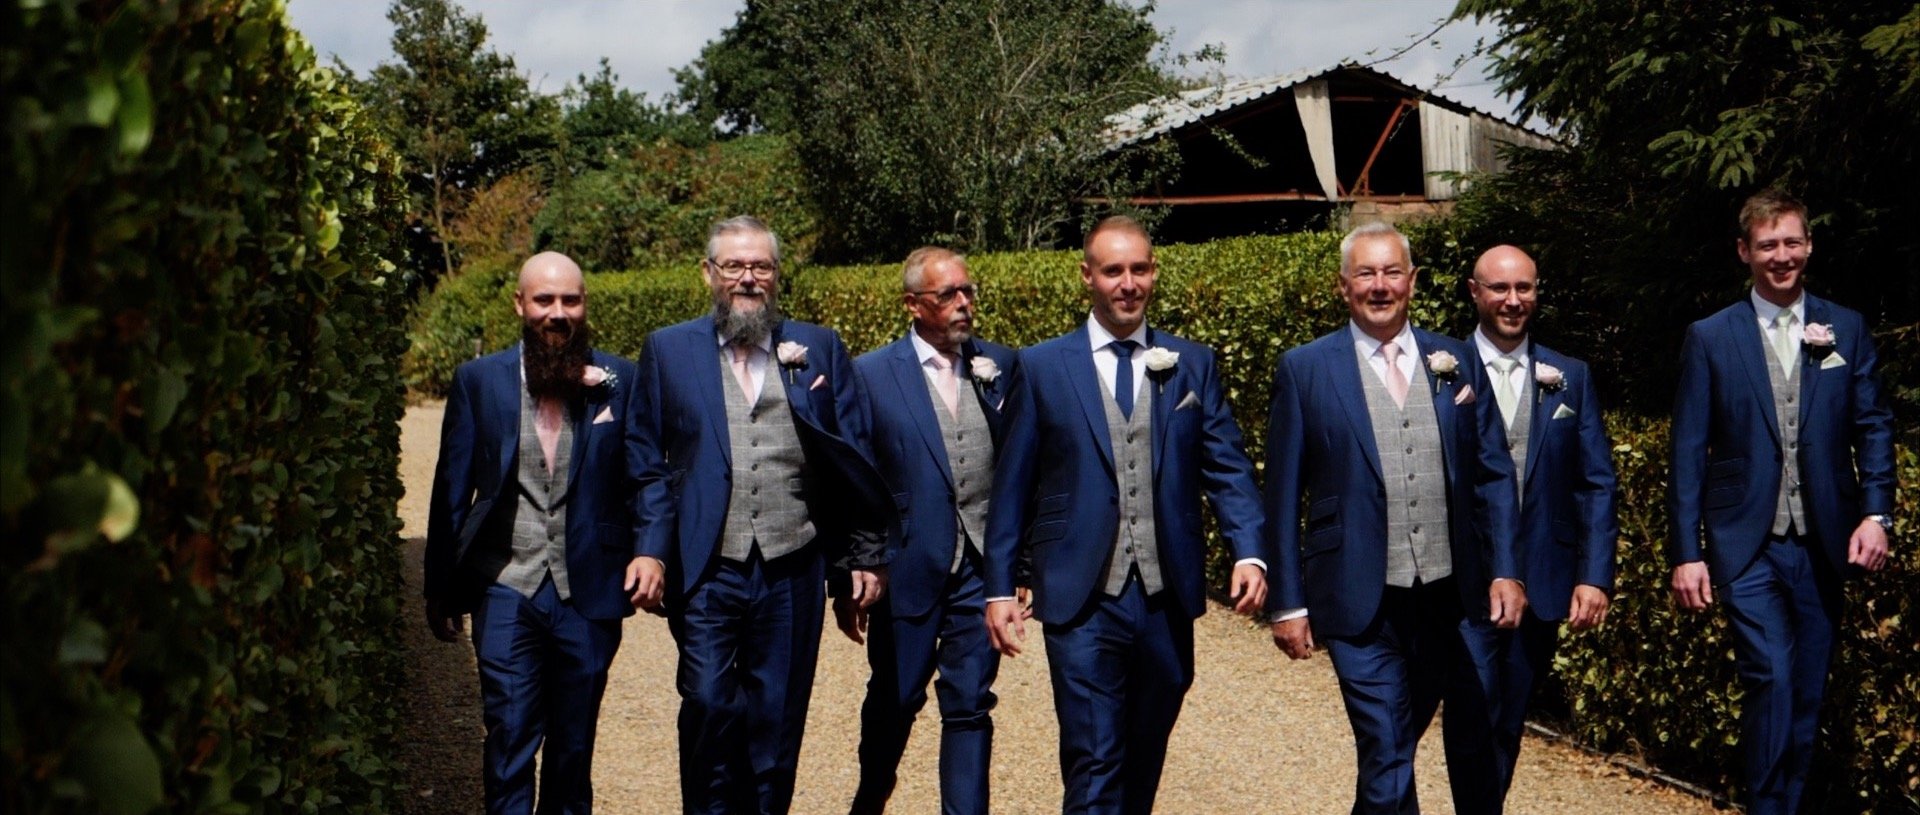 The groomsmen arrive at High House Essex wedding video.jpg